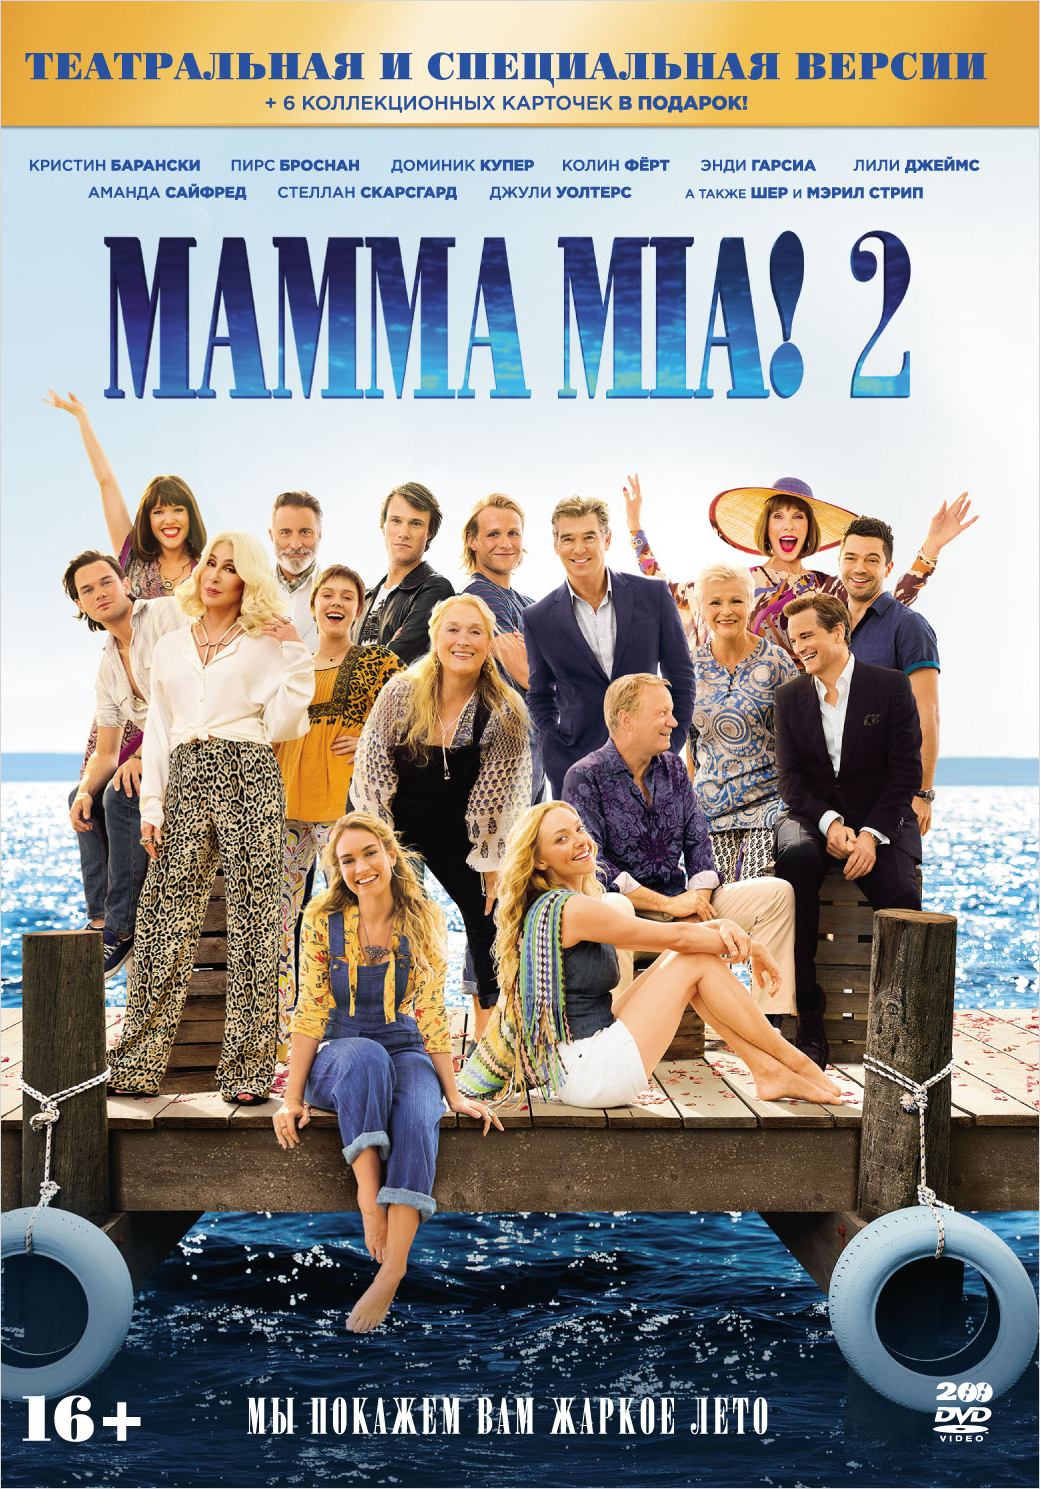 MAMMA MIA! 2: Специальное издание (2 DVD) цена и фото